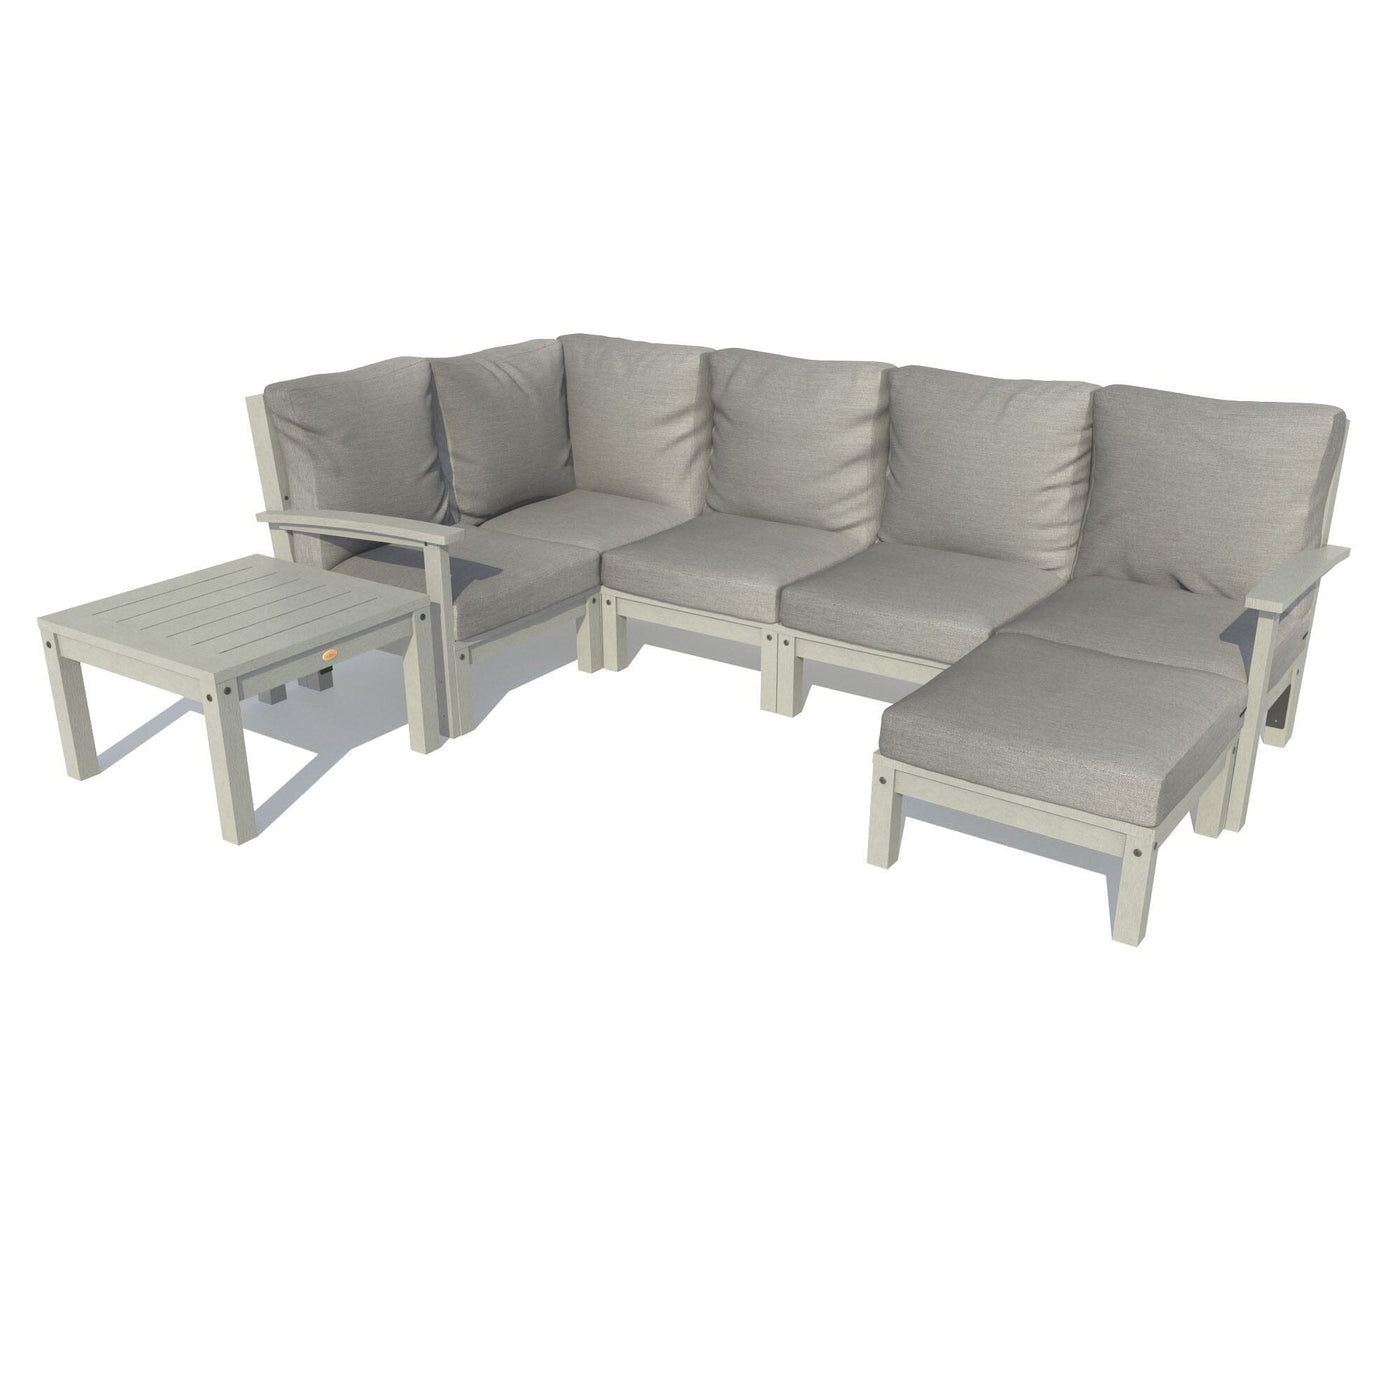 Bespoke Deep Seating: 7 Piece Sectional Set with Ottoman and Side Table Deep Seating Highwood USA Stone Gray Coastal Teak 